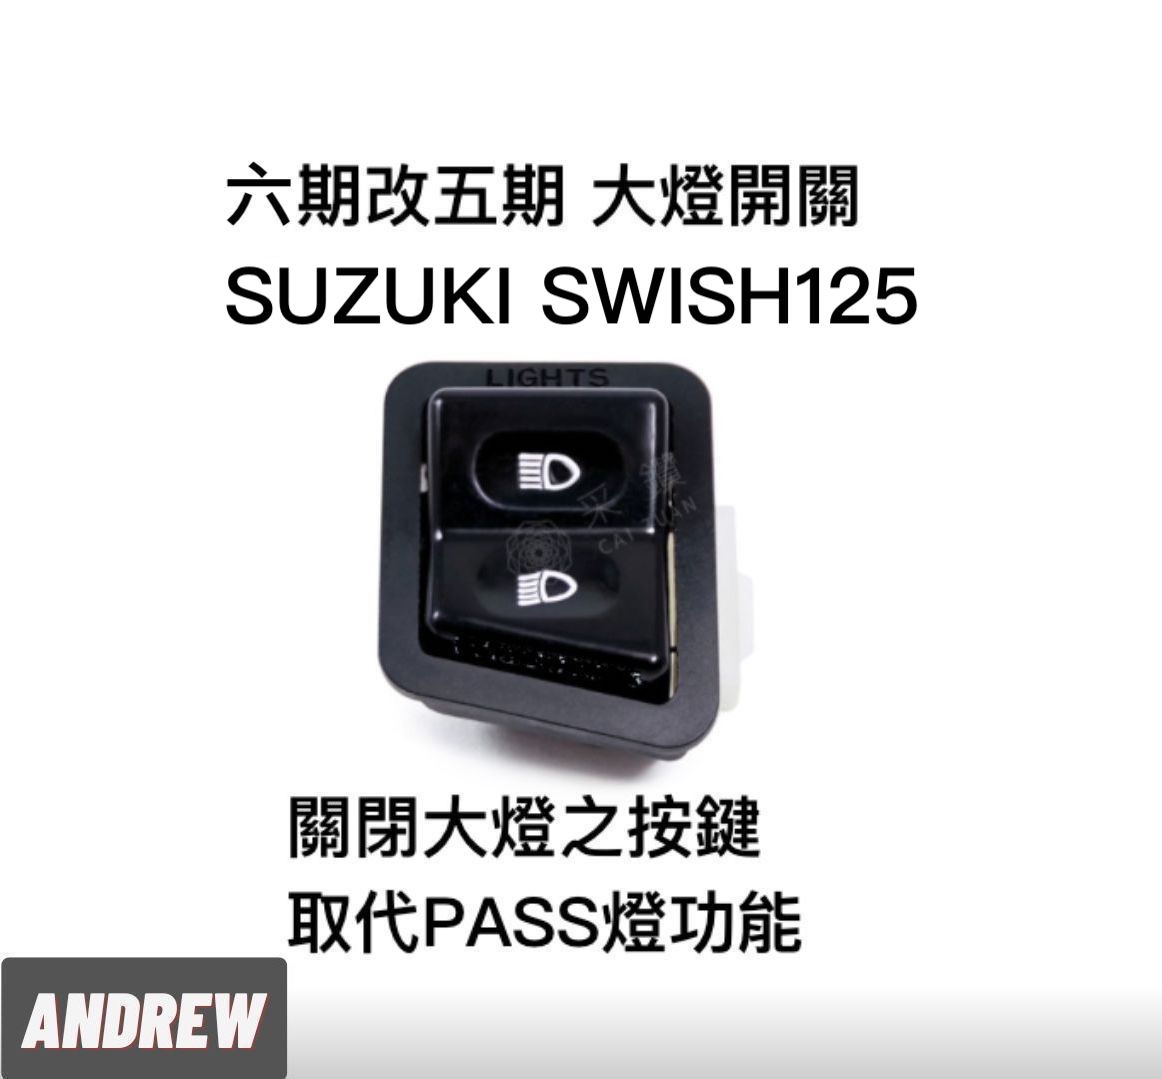 【安德魯ANDREW】SUZUKI SWISH125 全時點燈六期改五期功能大燈開關